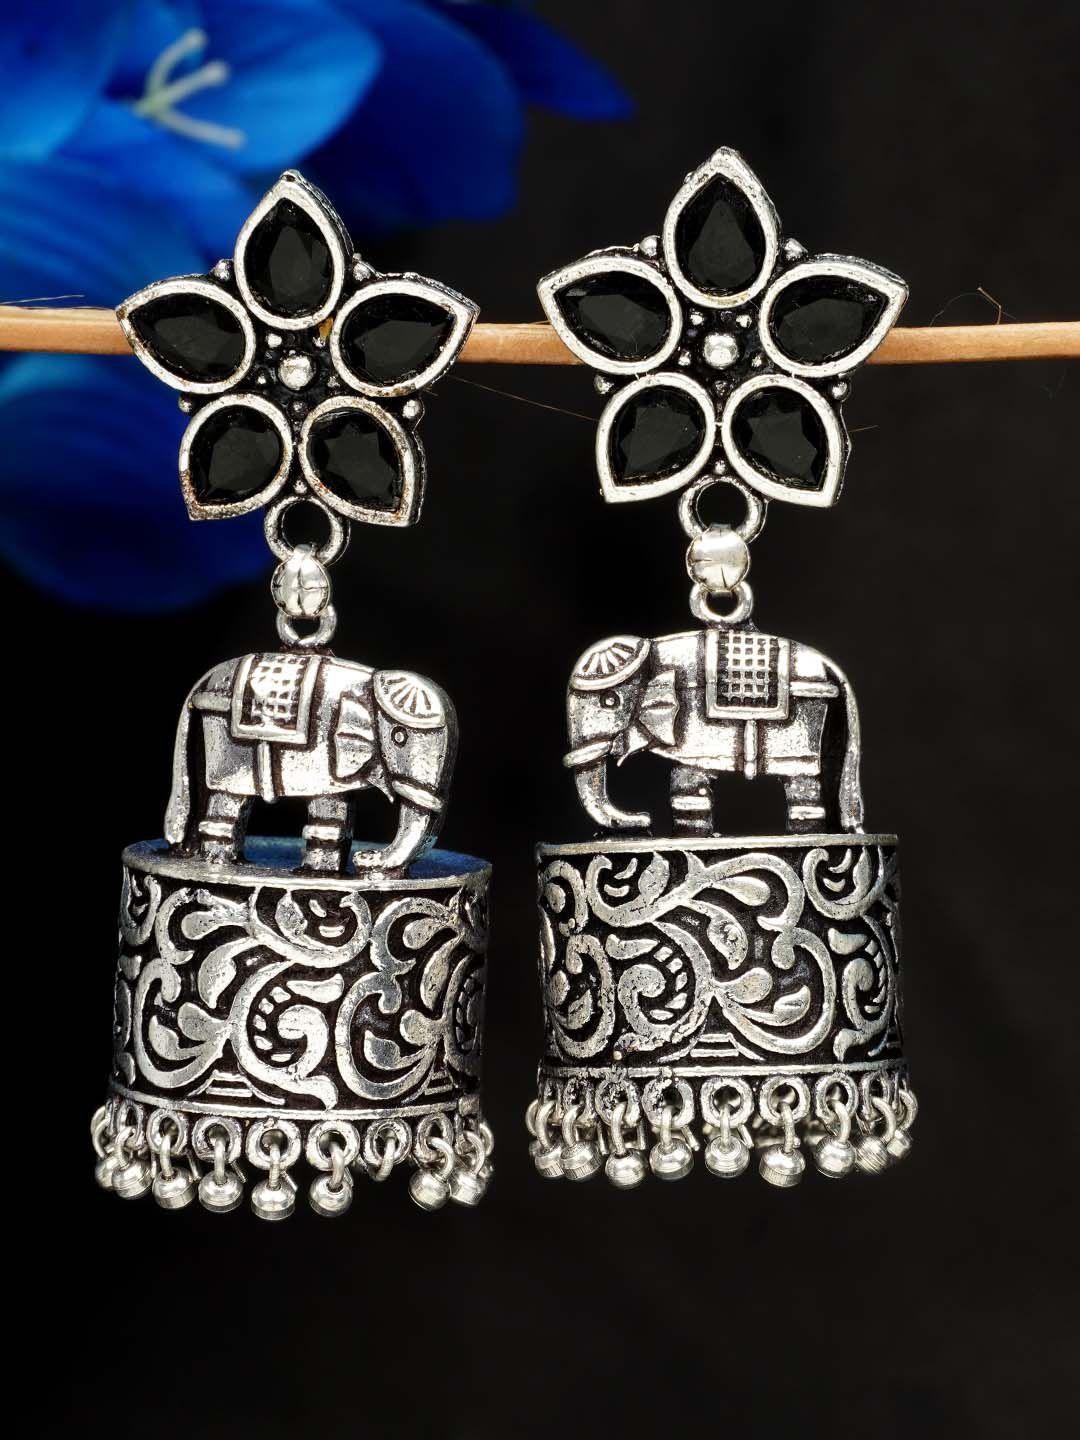 urmika silver-toned floral jhumkas earrings